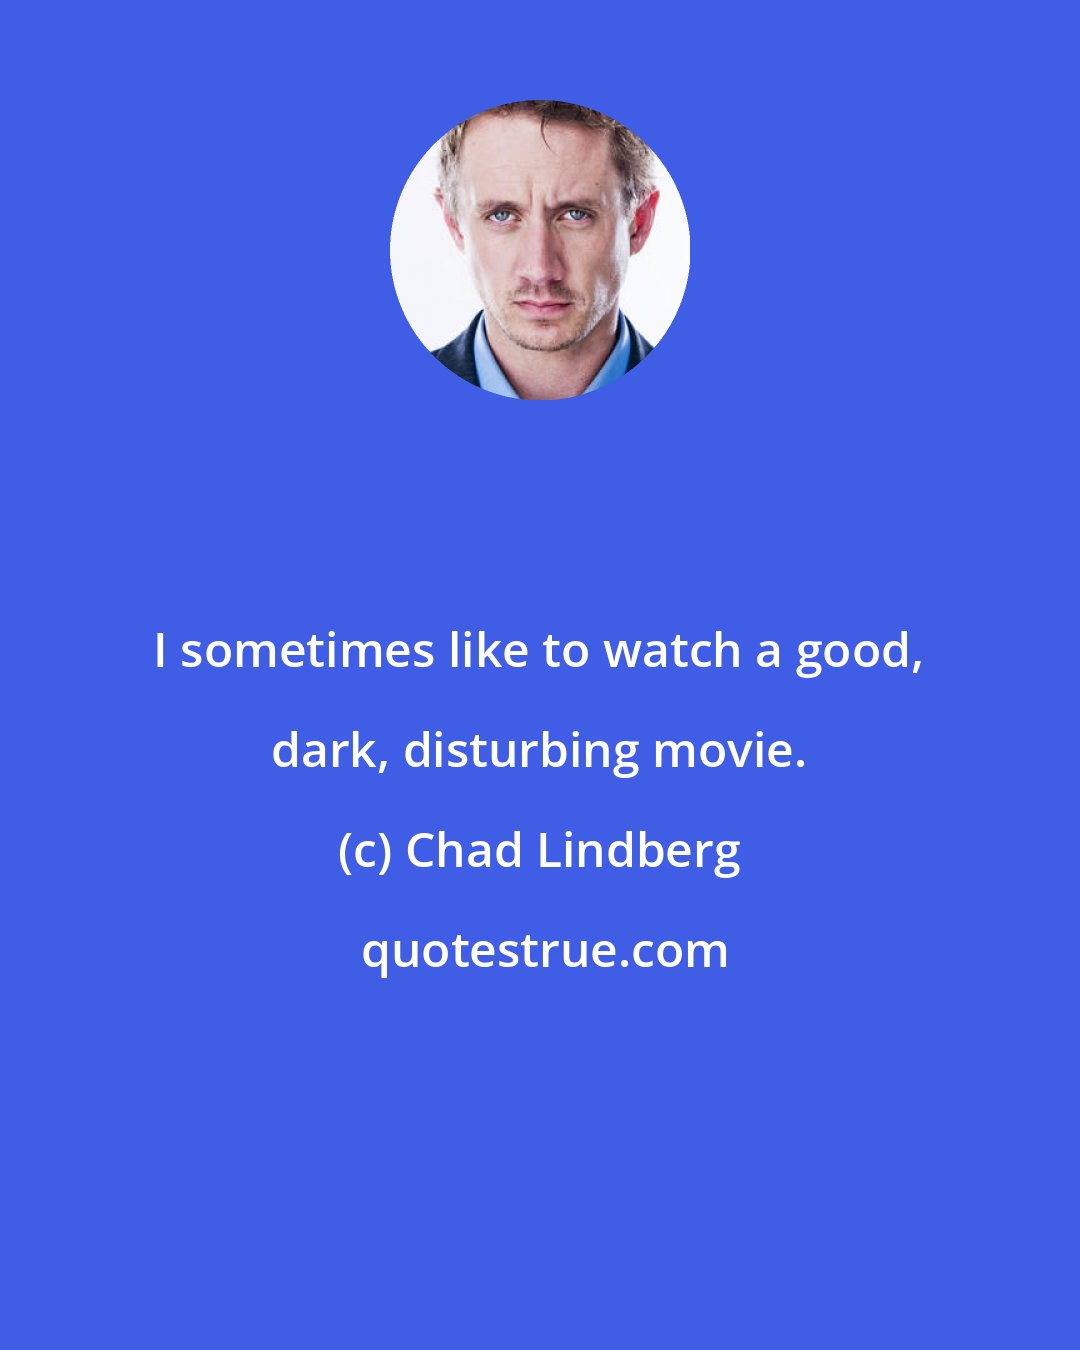 Chad Lindberg: I sometimes like to watch a good, dark, disturbing movie.